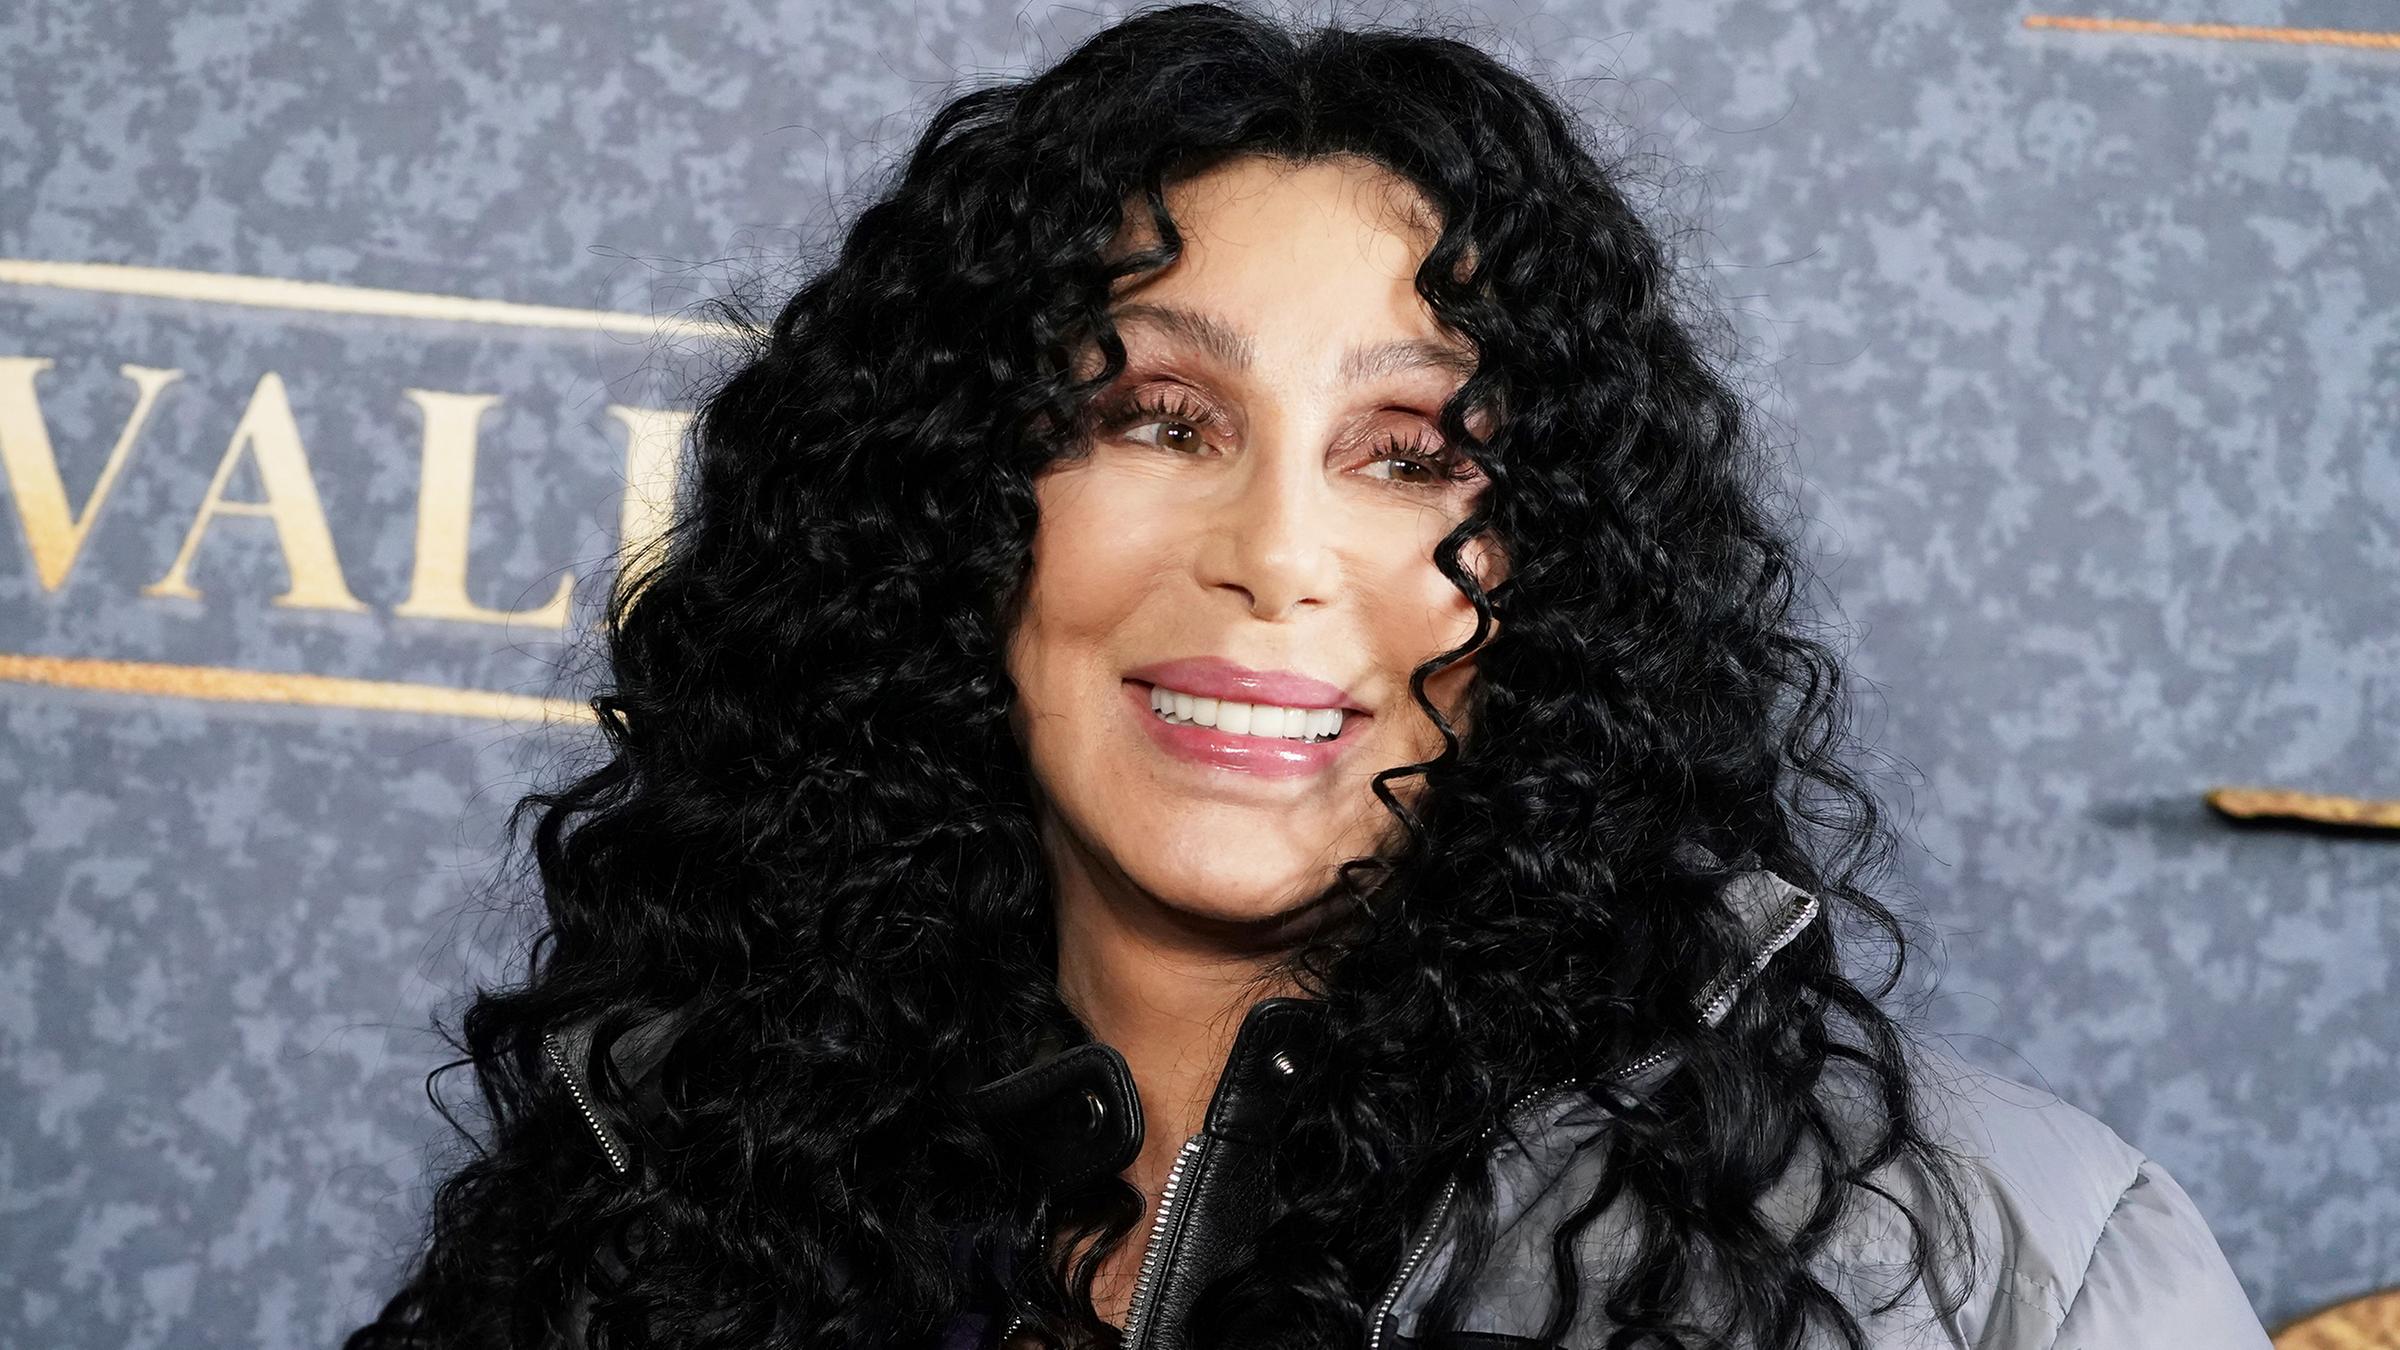 Sängerin Cher lächelt